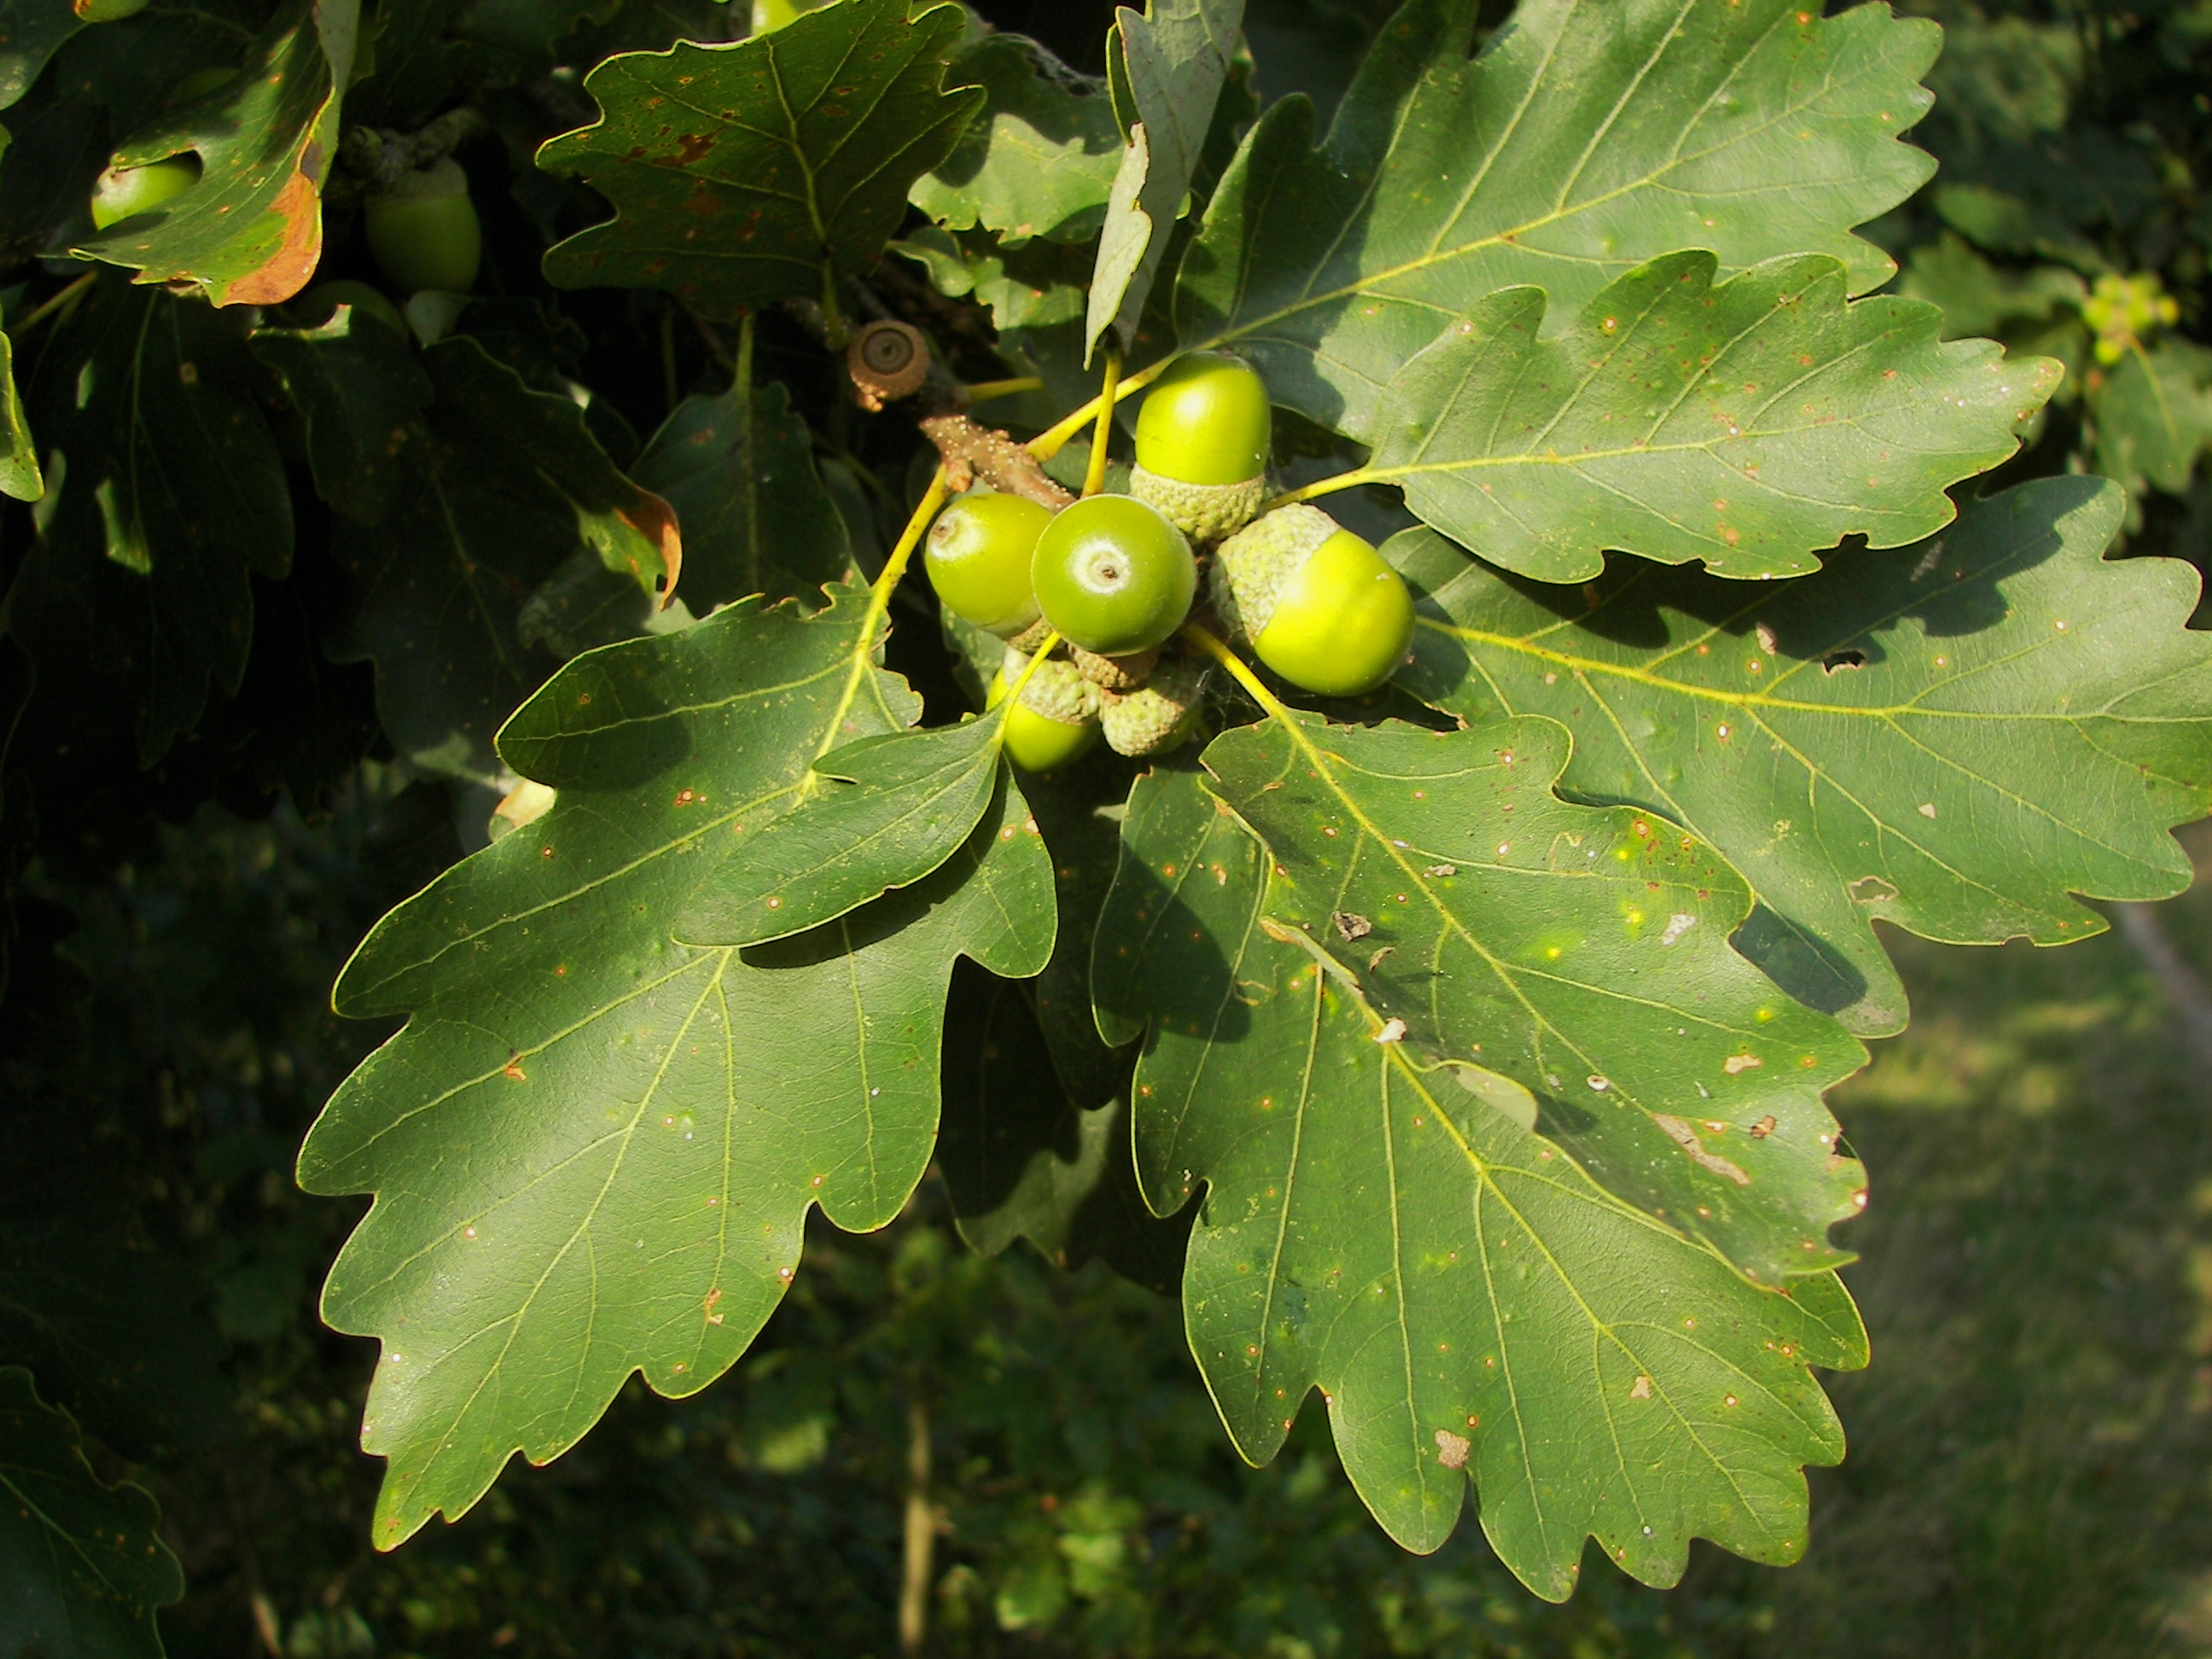 Leaves and acorns